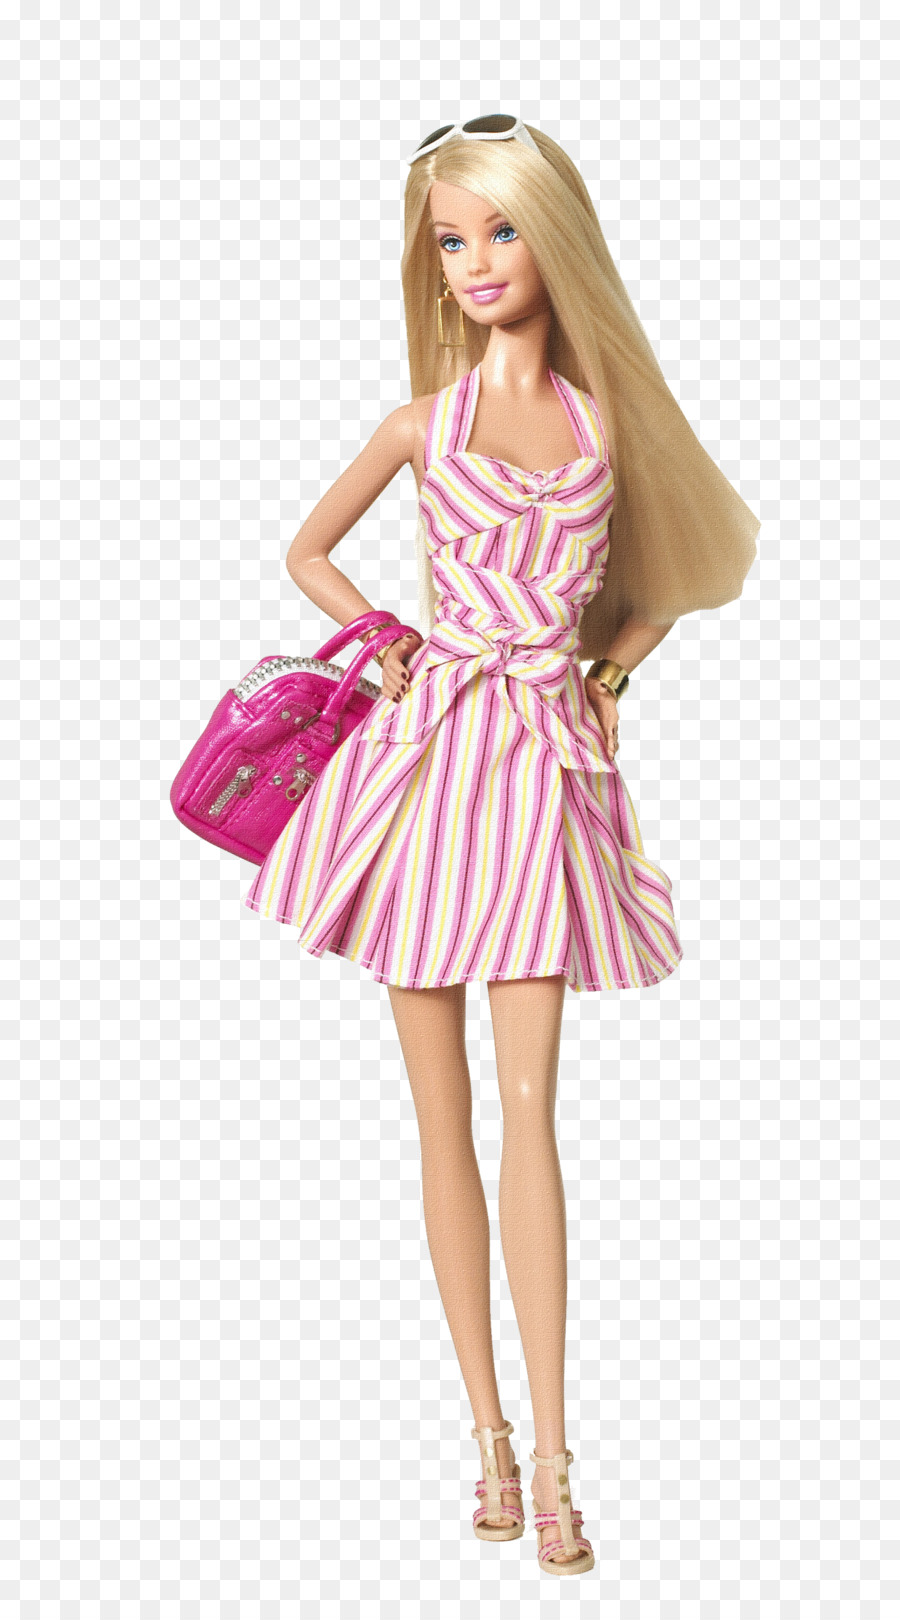 Ruth Handler The Original Teenage Fashion Model Barbie Doll The Original Teenage Fashion Model Barbie Doll Ken - doll png download - 1838*3307 - Free Transparent Ruth Handler png Download.